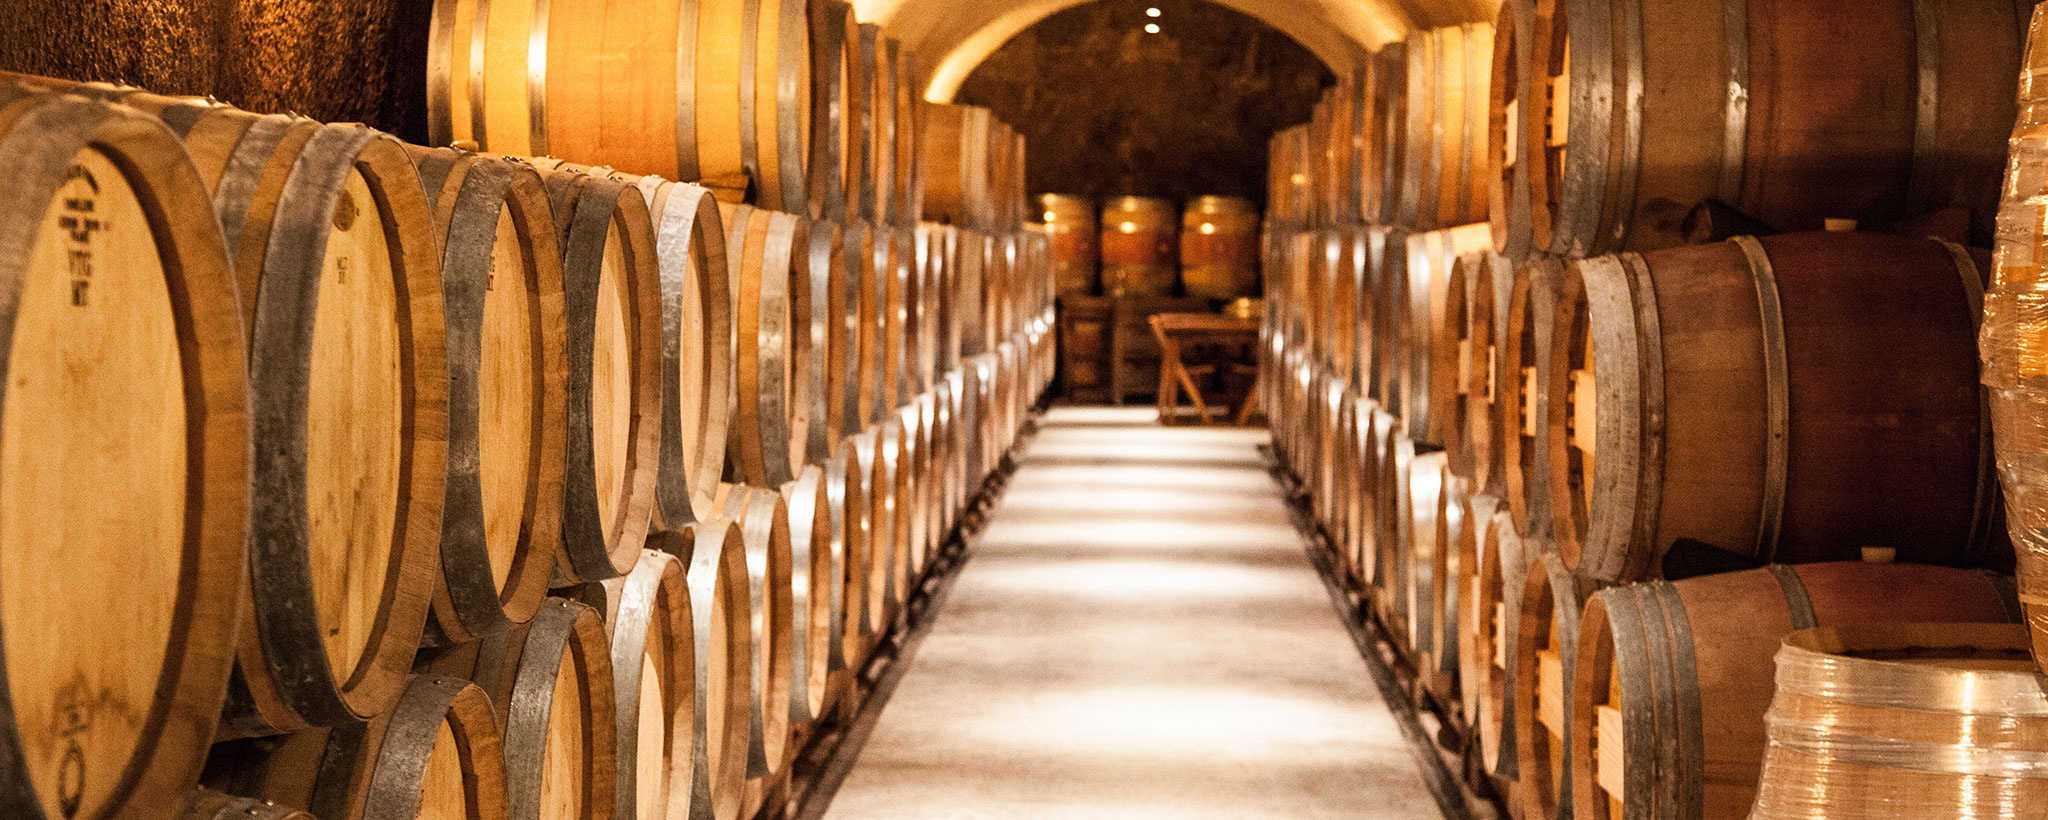 stored wine barrels